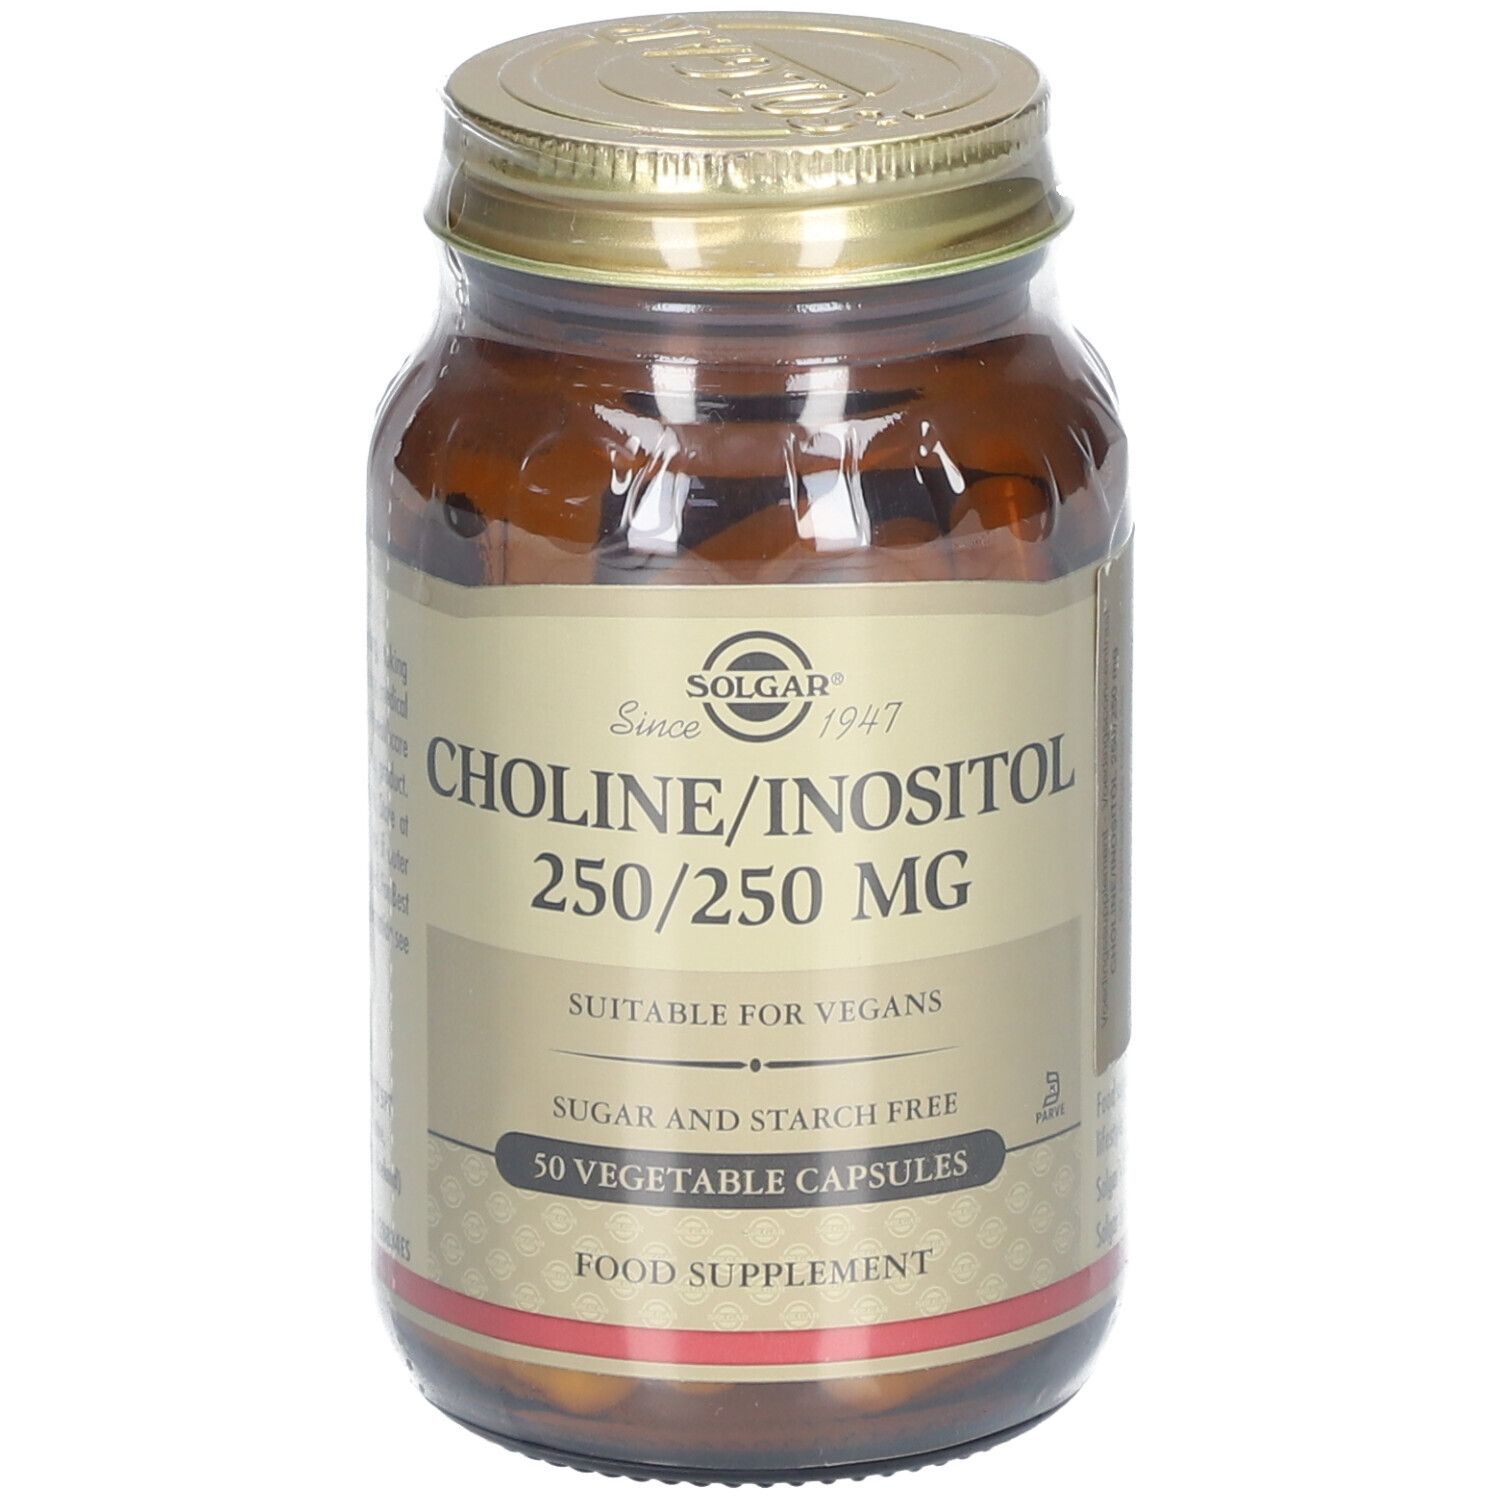 SOLGAR VITAMINS Solgar® Choline/Inosito 250/250 mg